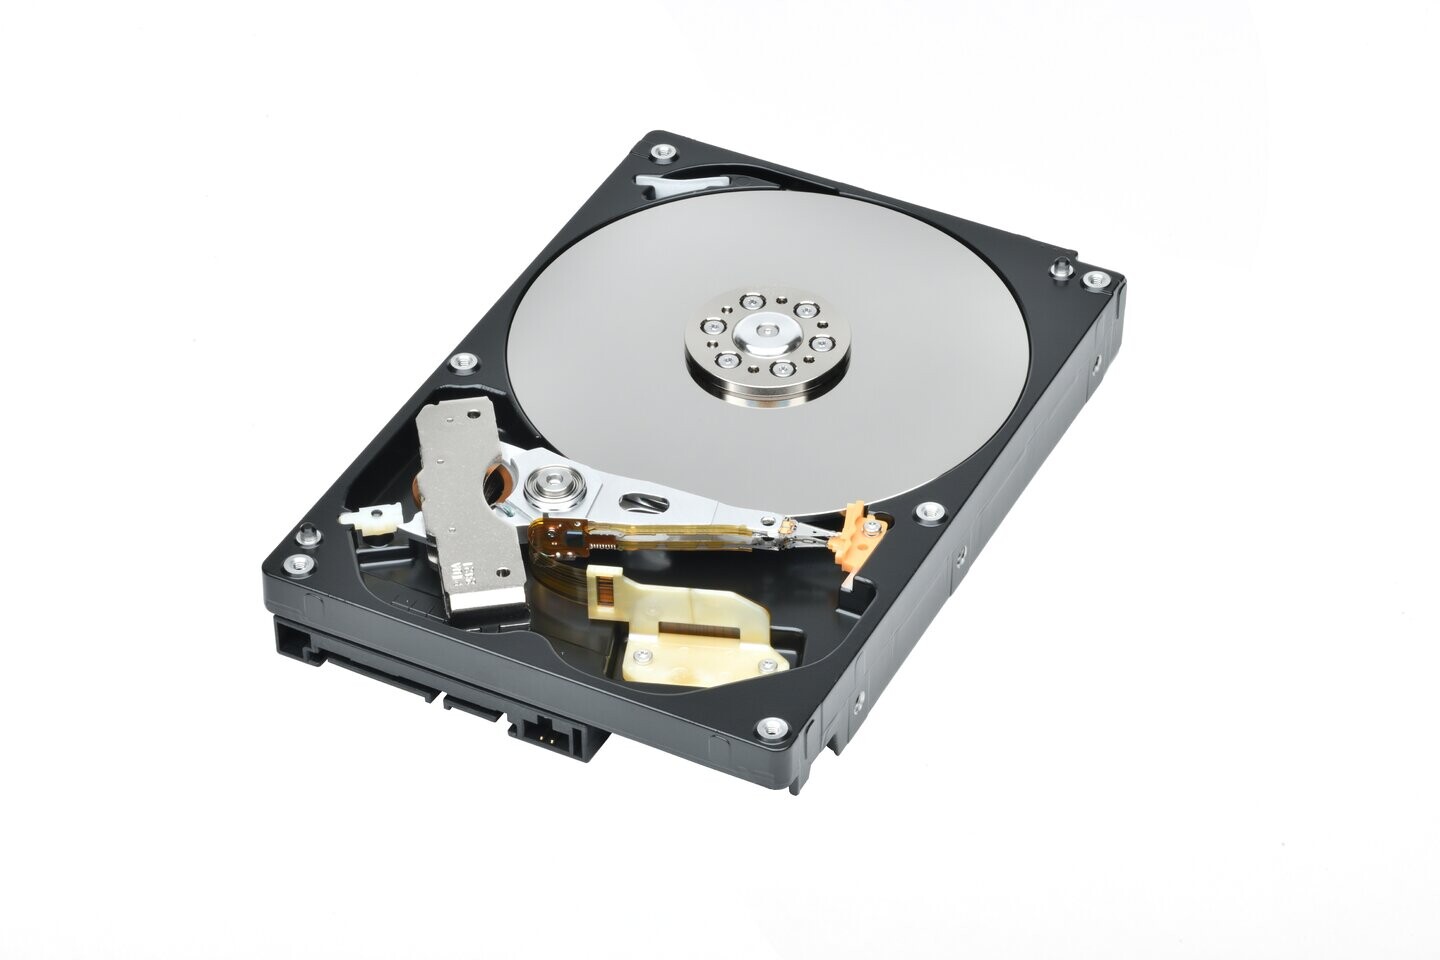 (PR) Toshiba Announces DT02 7200 RPM 2 TB Hard Disk Drive